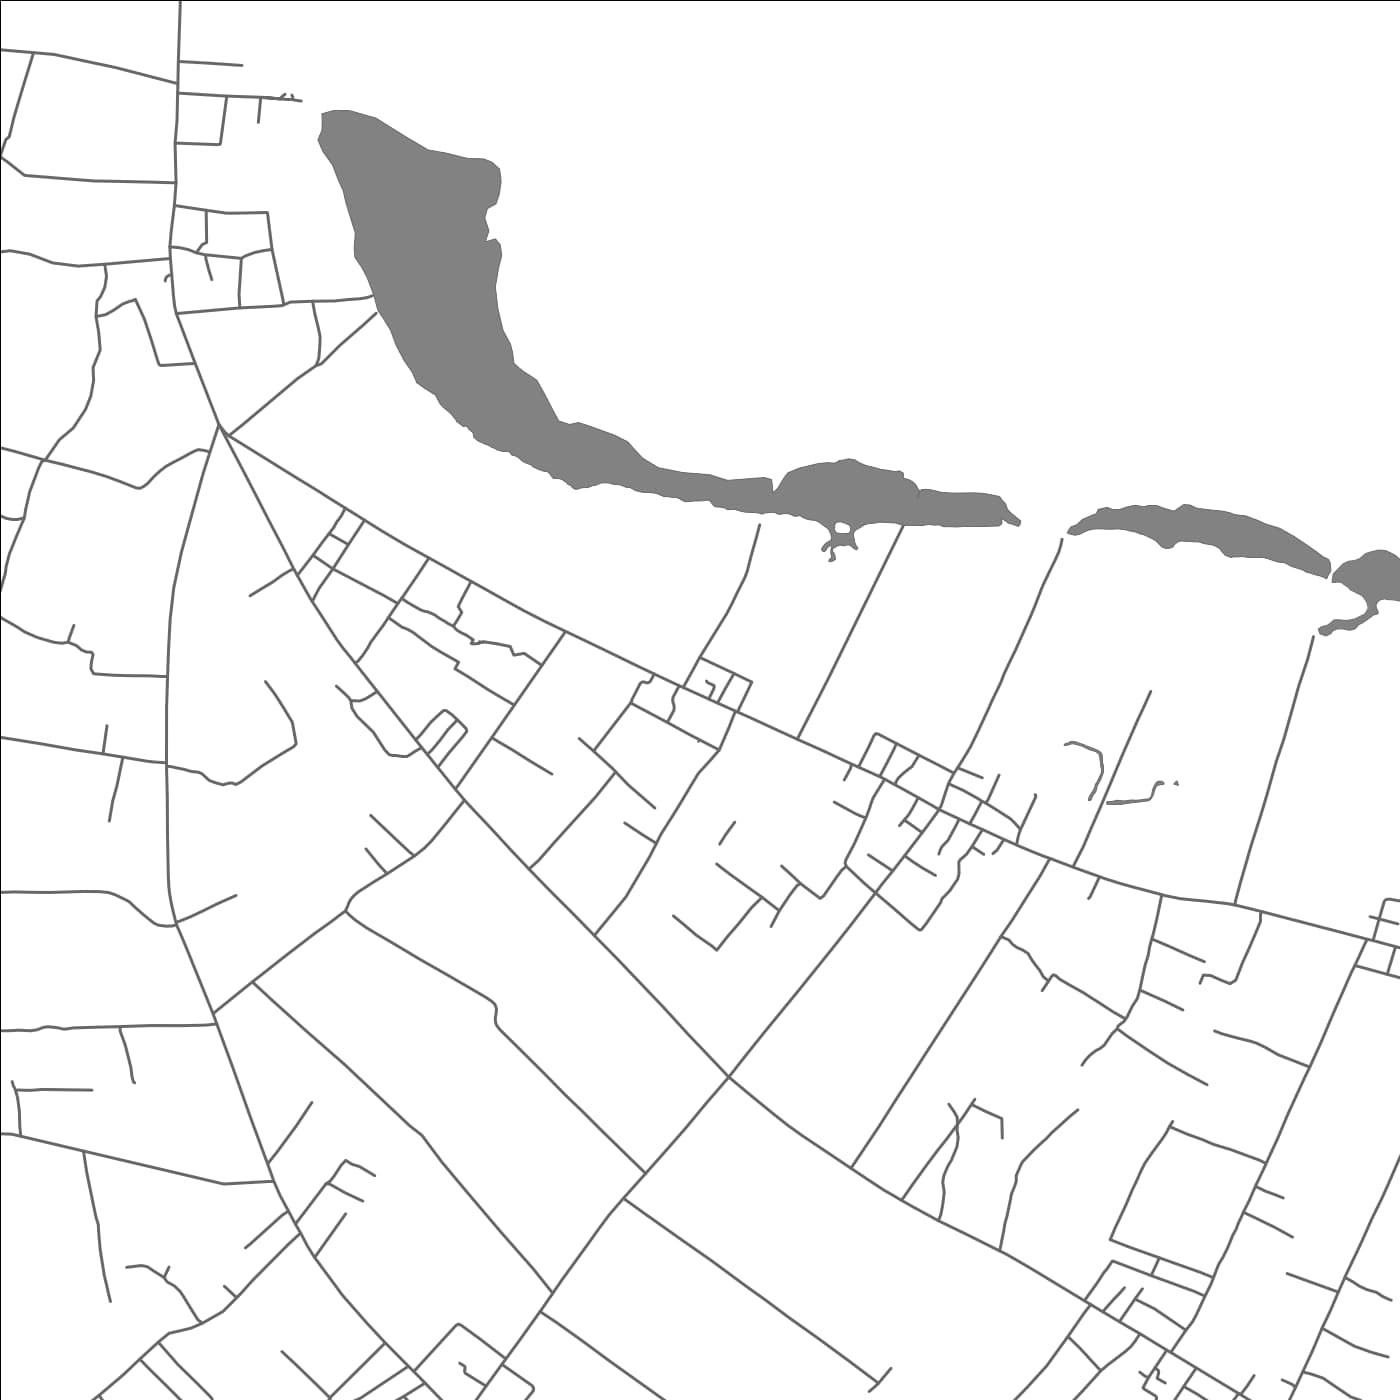 ROAD MAP OF MASILAMEA, TONGA BY MAPBAKES